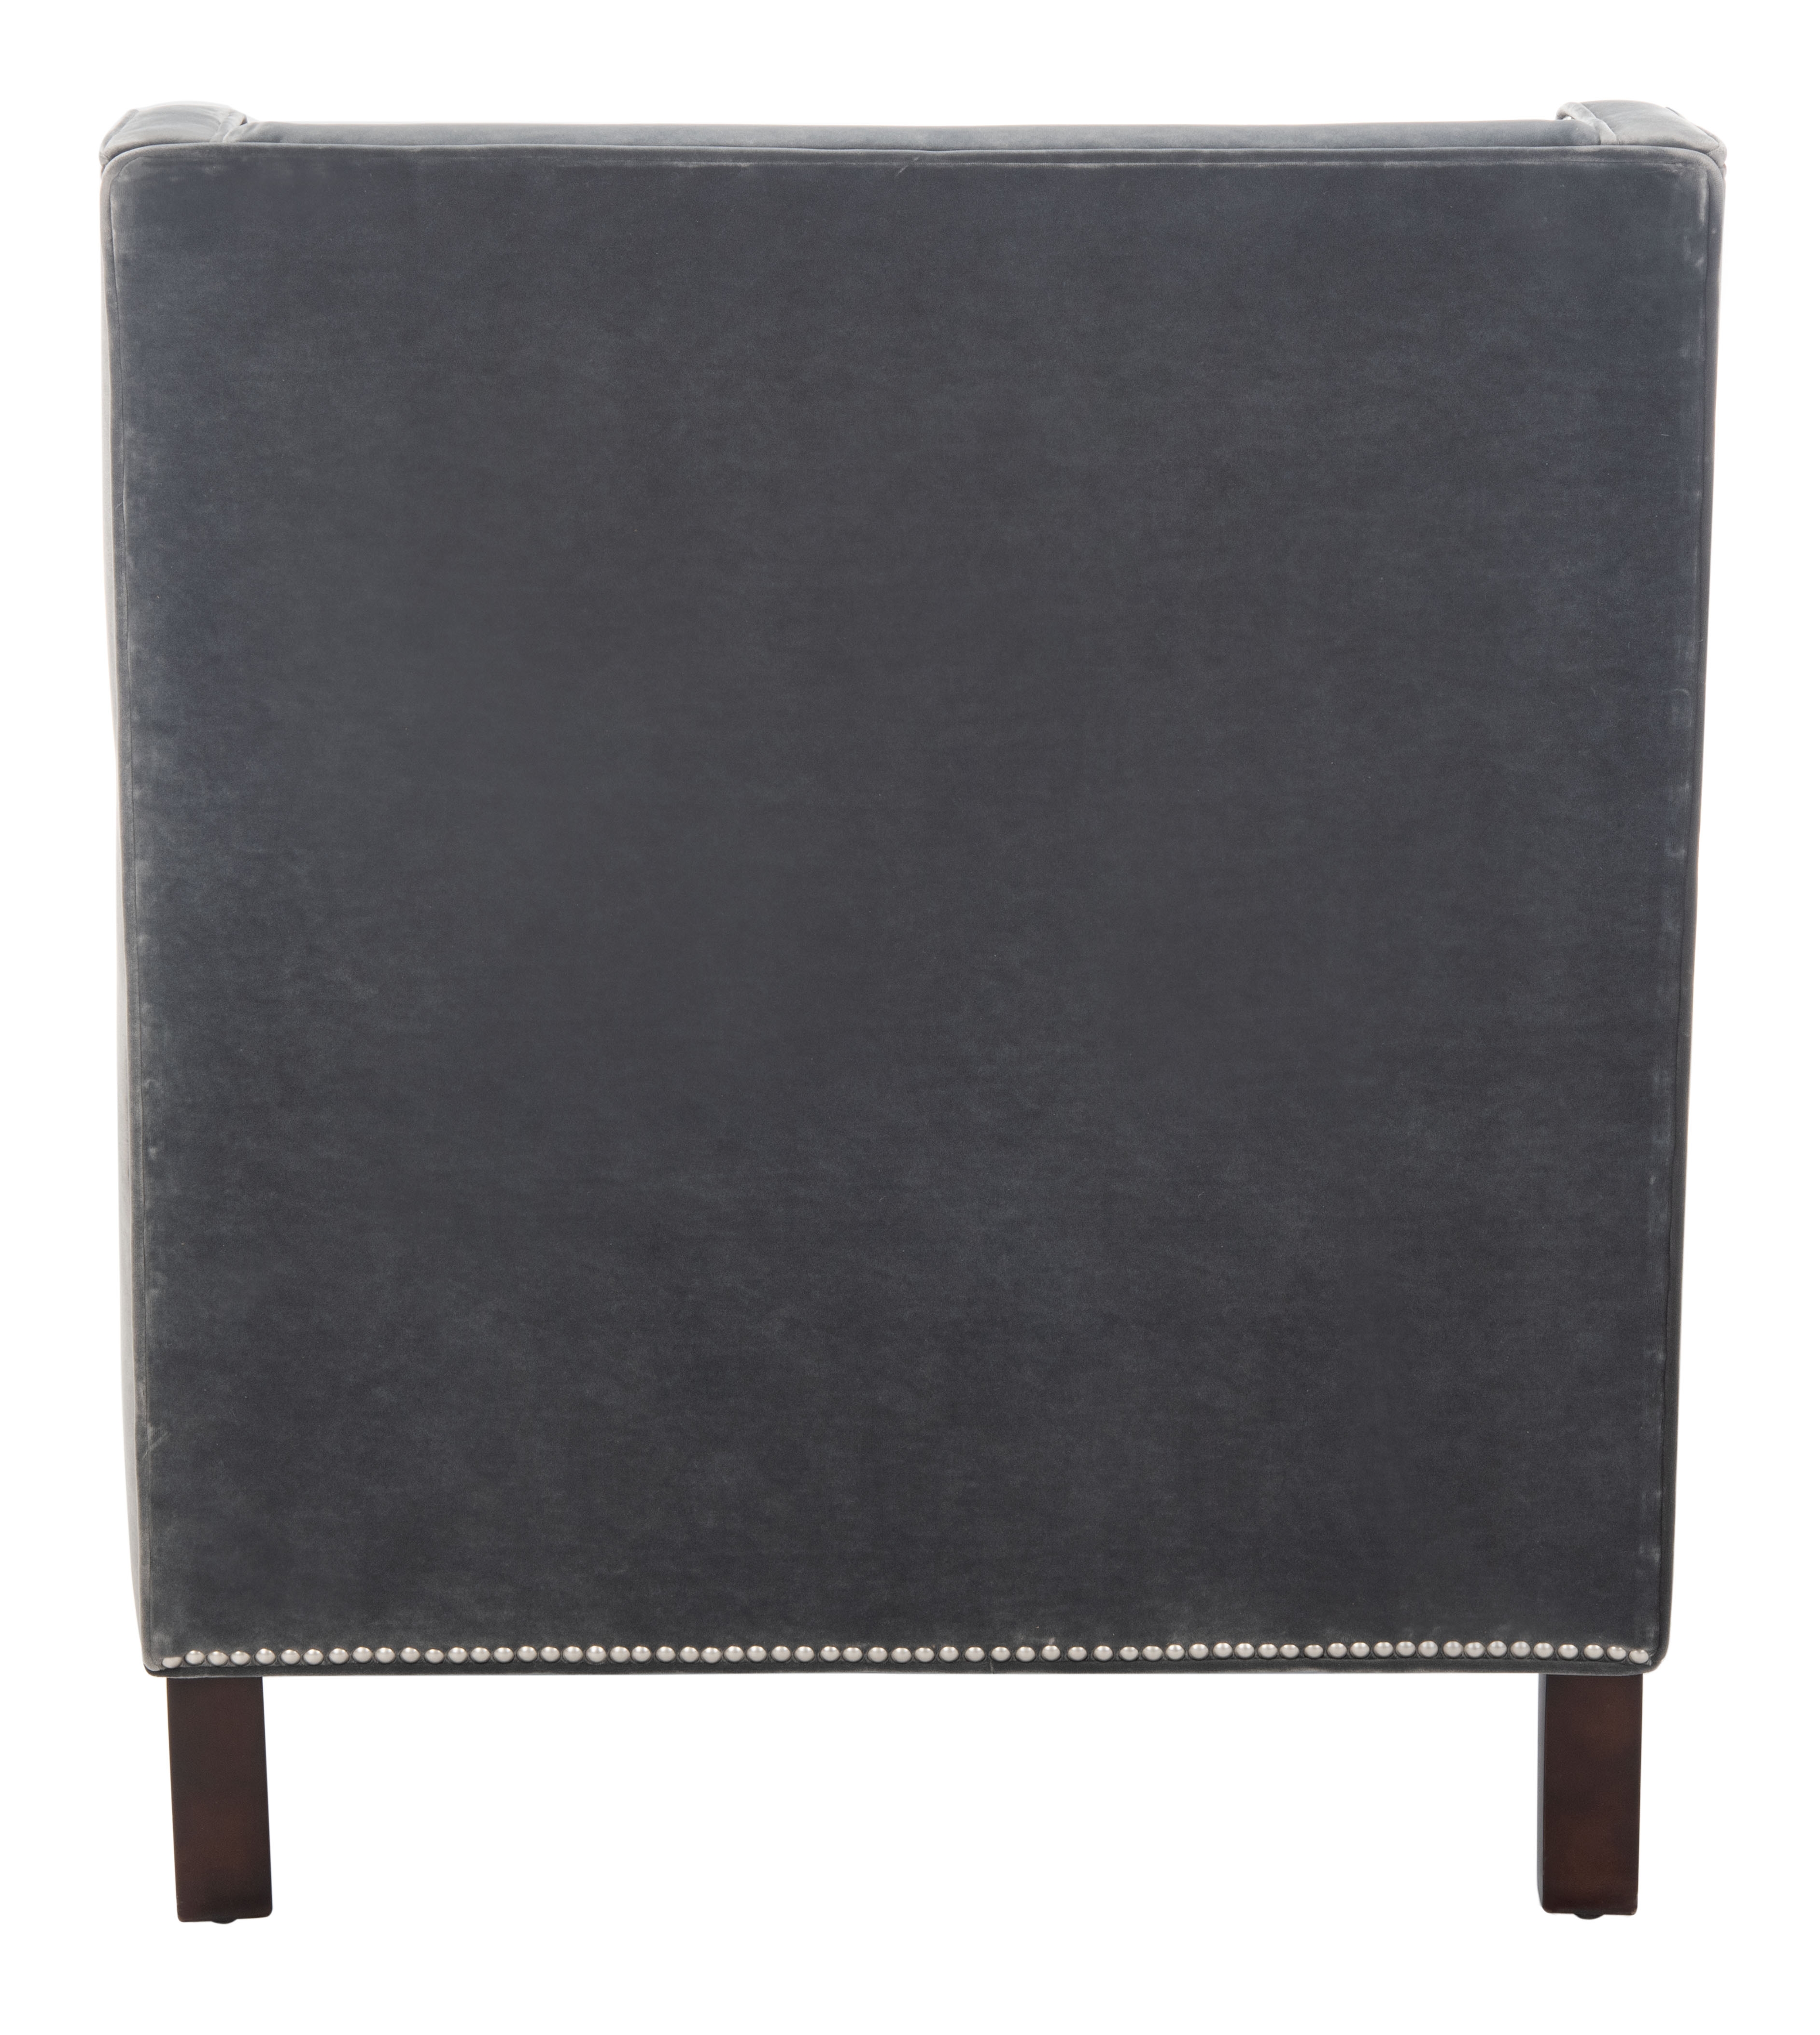 Vitali Studded Chaise - Charcoal - Arlo Home - Image 3